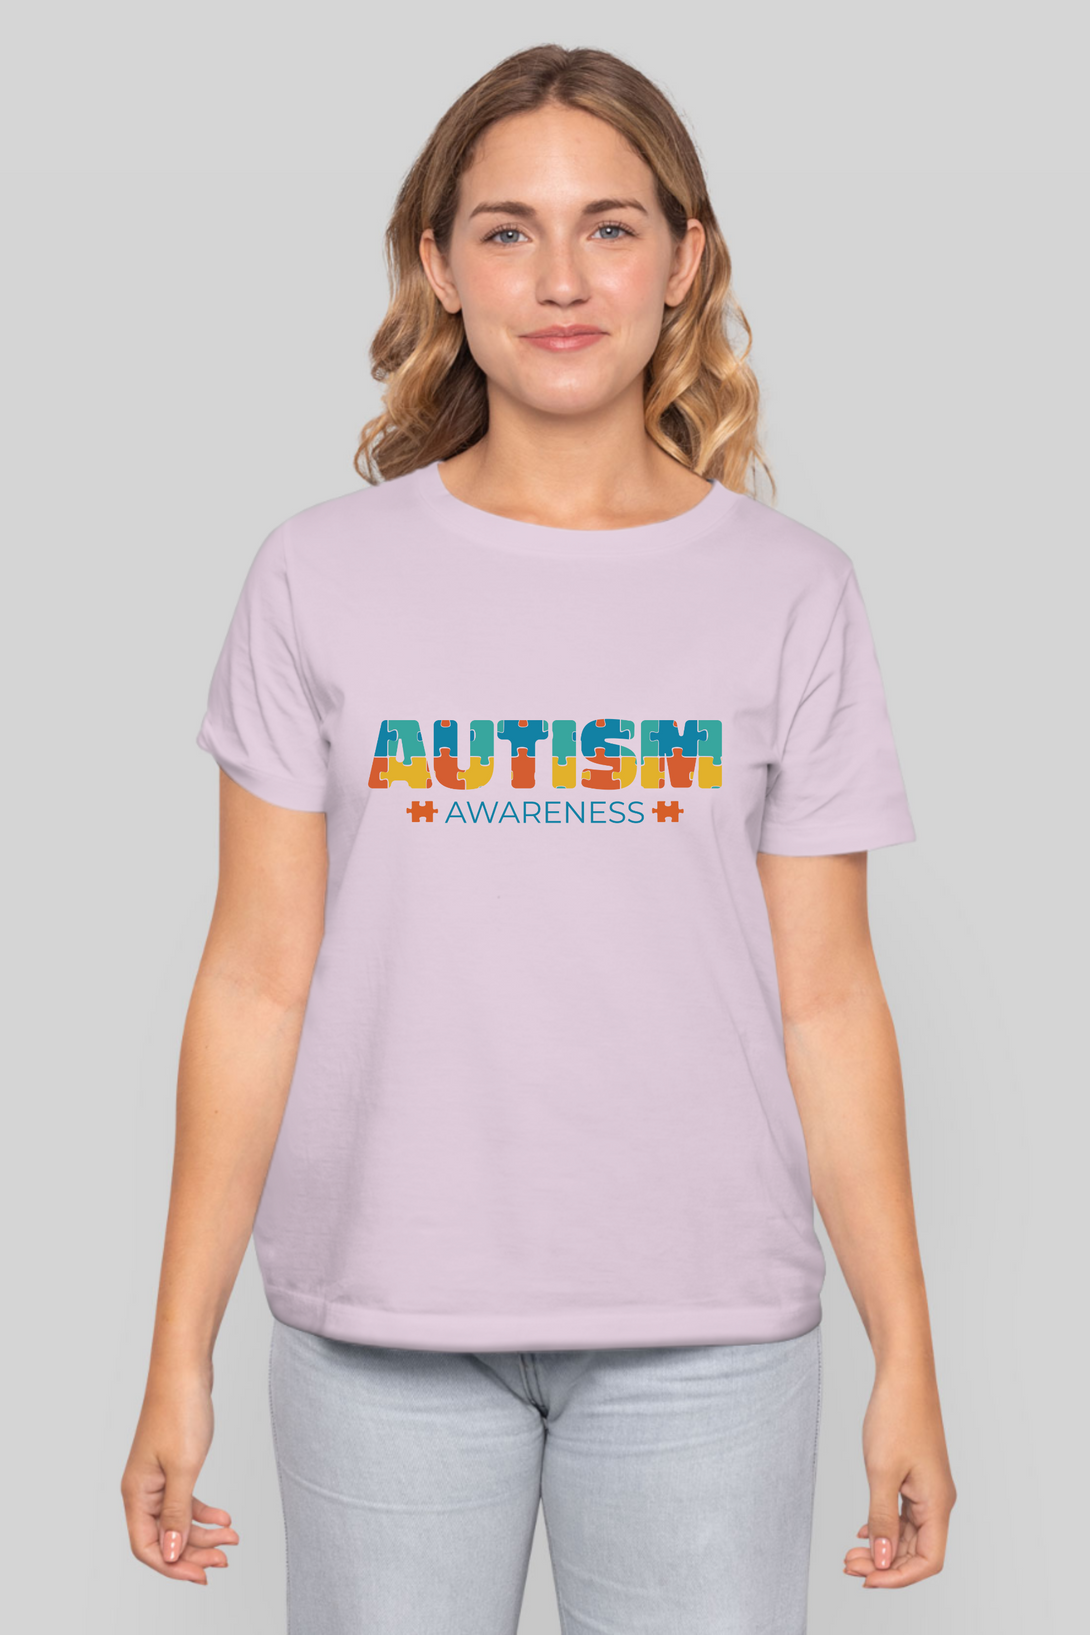 Autism Awareness Printed T-Shirt For Women - WowWaves - 11